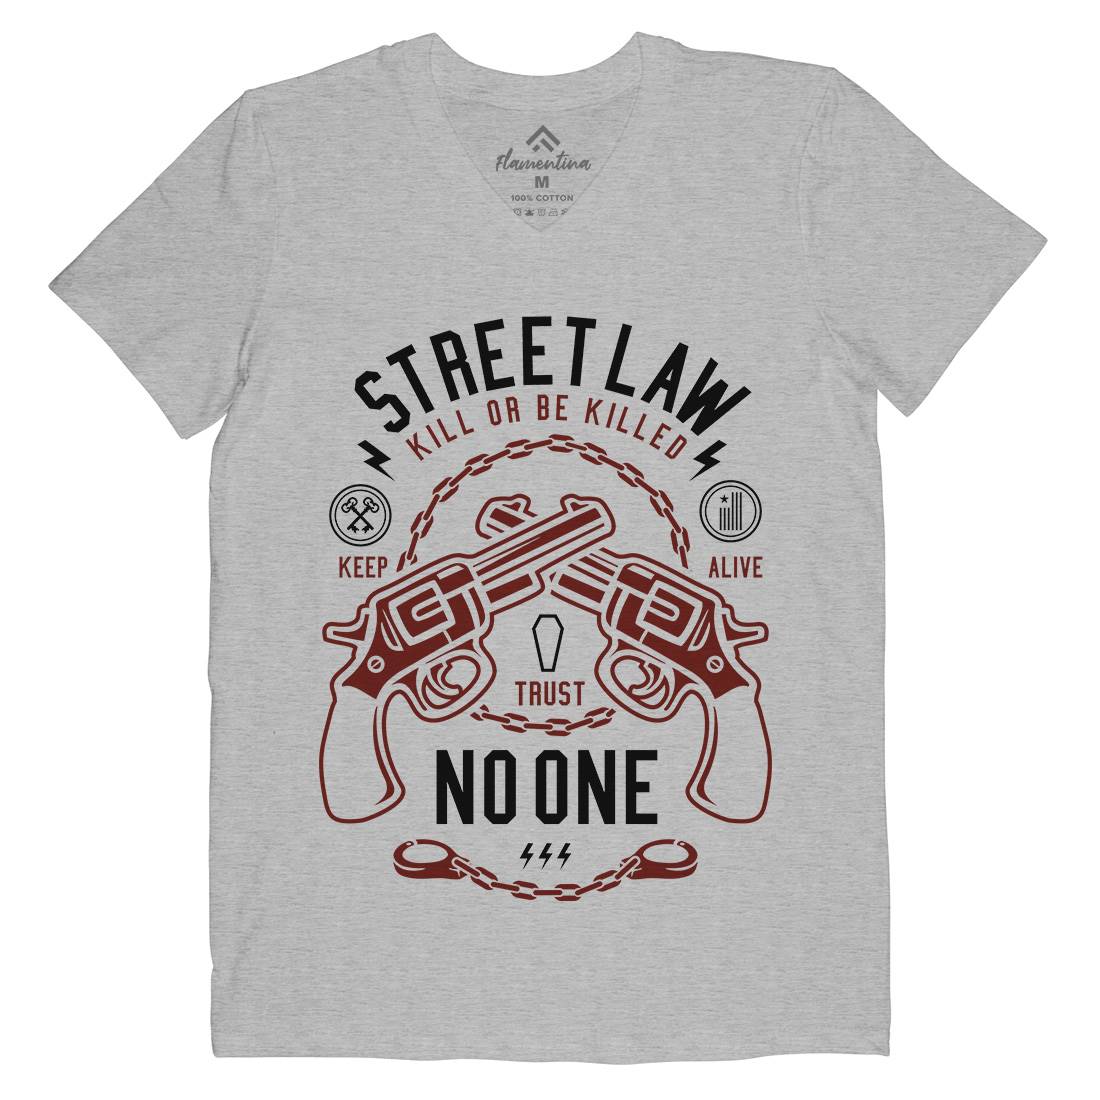 Street Law Mens Organic V-Neck T-Shirt Quotes A286